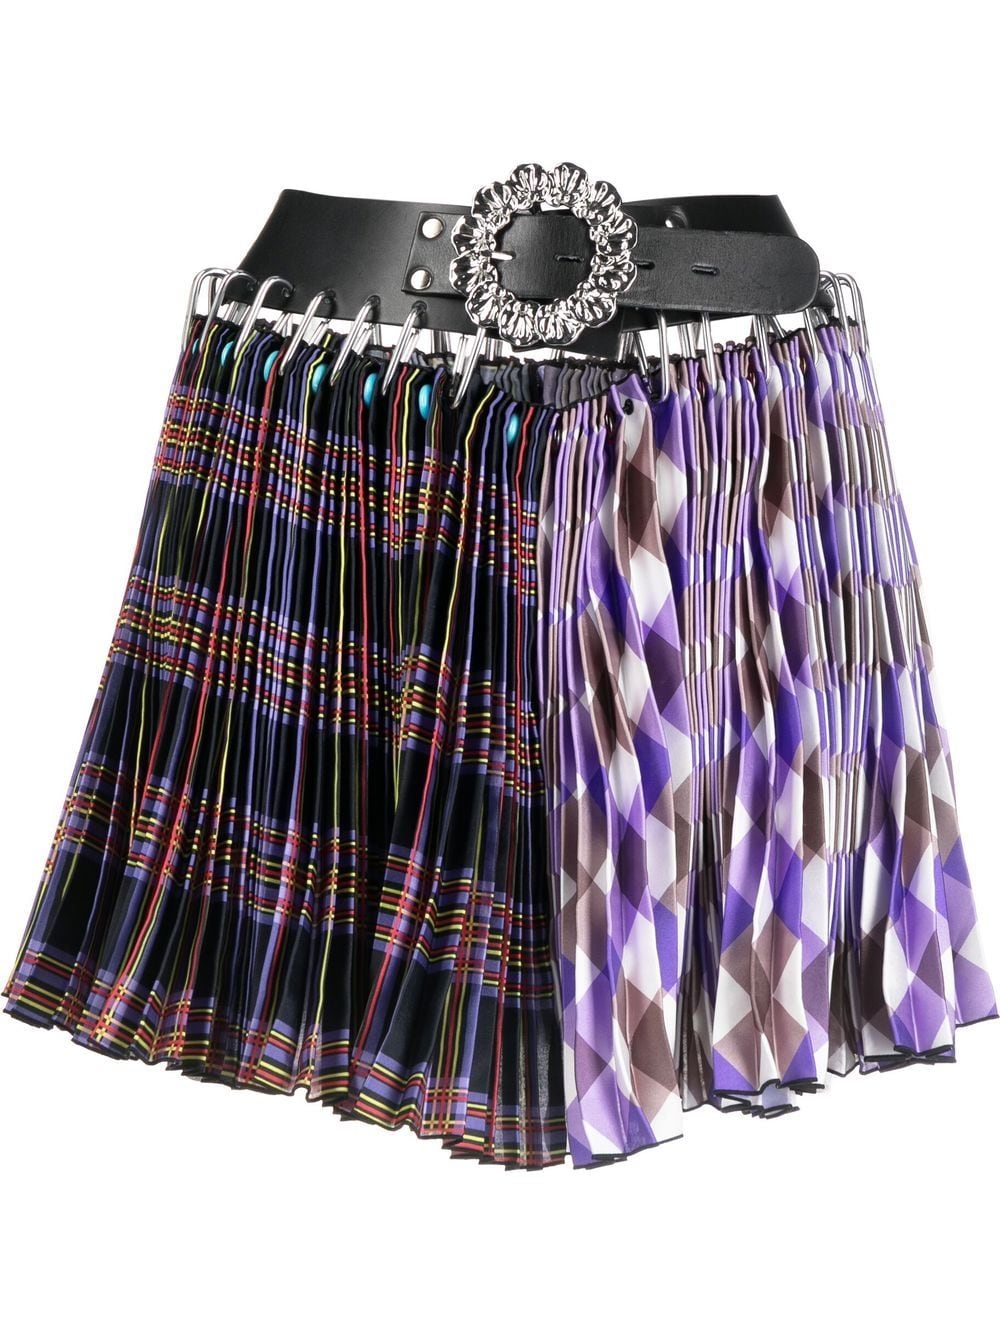 Chopova Lowena Pleated Skirts Are Pricey But Worth It